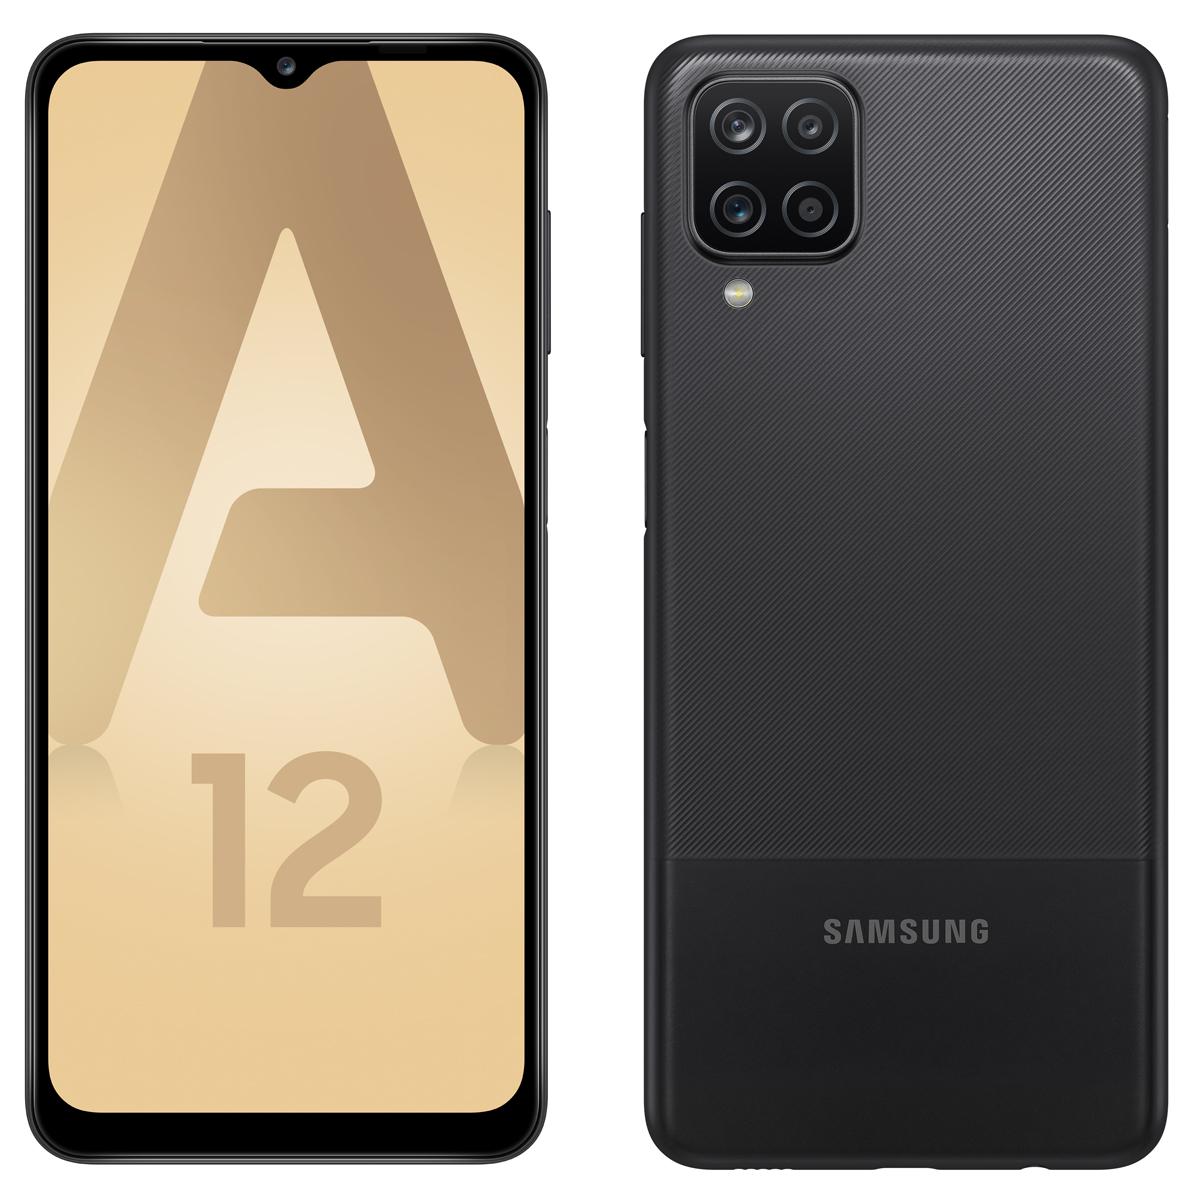 Smartphone Android Samsung Galaxy A12 - 64 Go - Noir